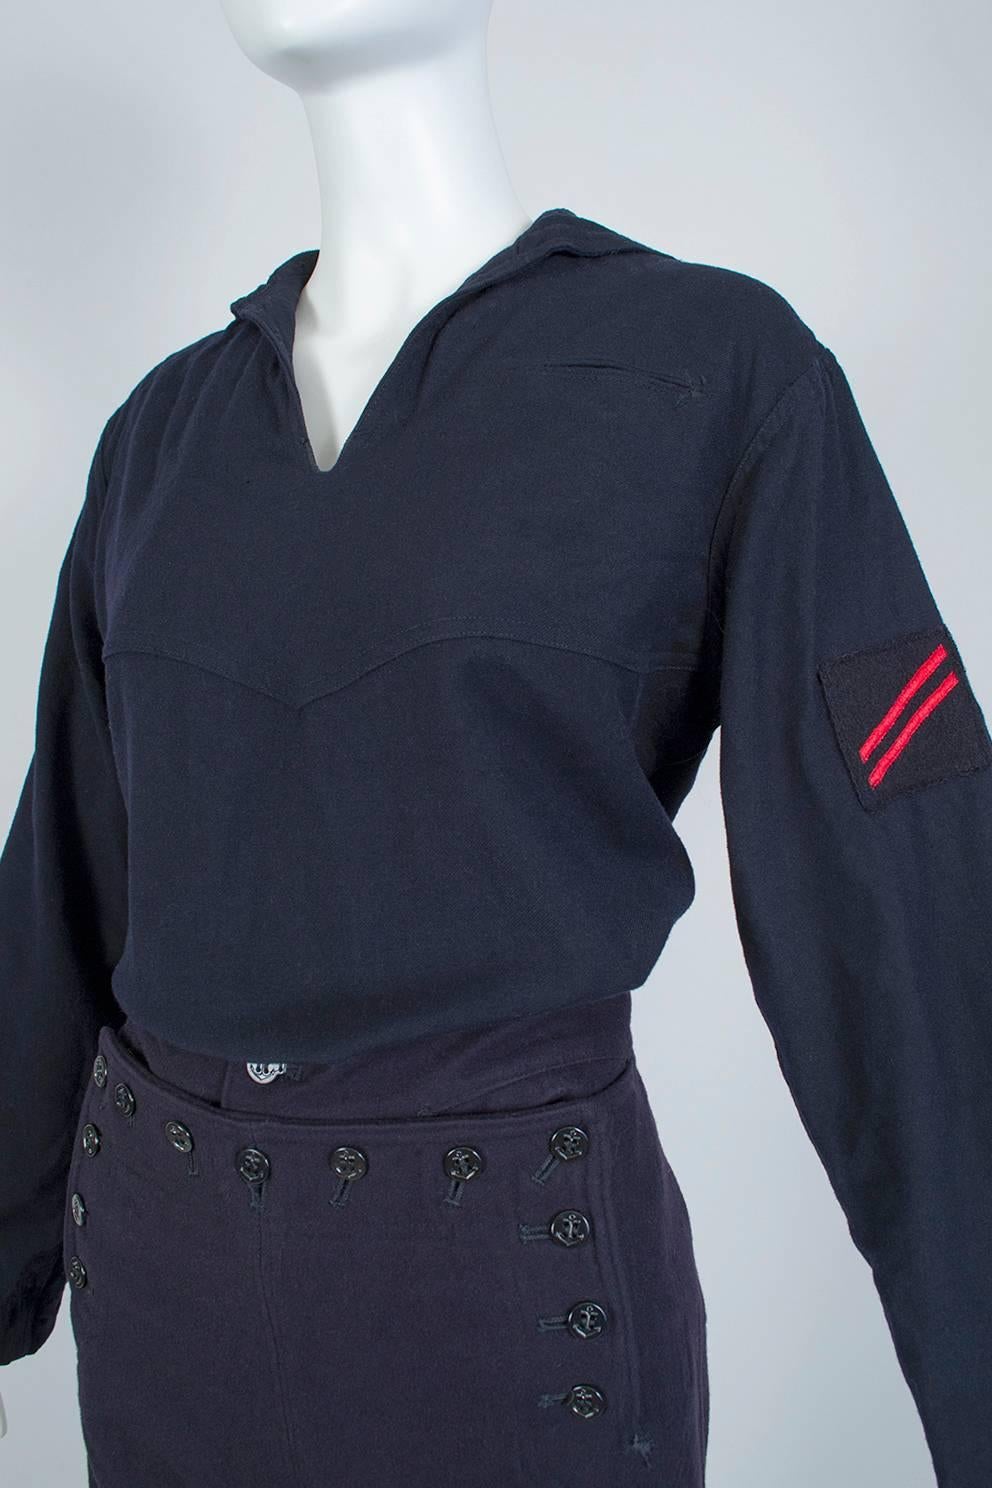 Black US Navy Crackerjack Sailor Pant and Middy Shirt Ensemble - Men S / Women L, 1967